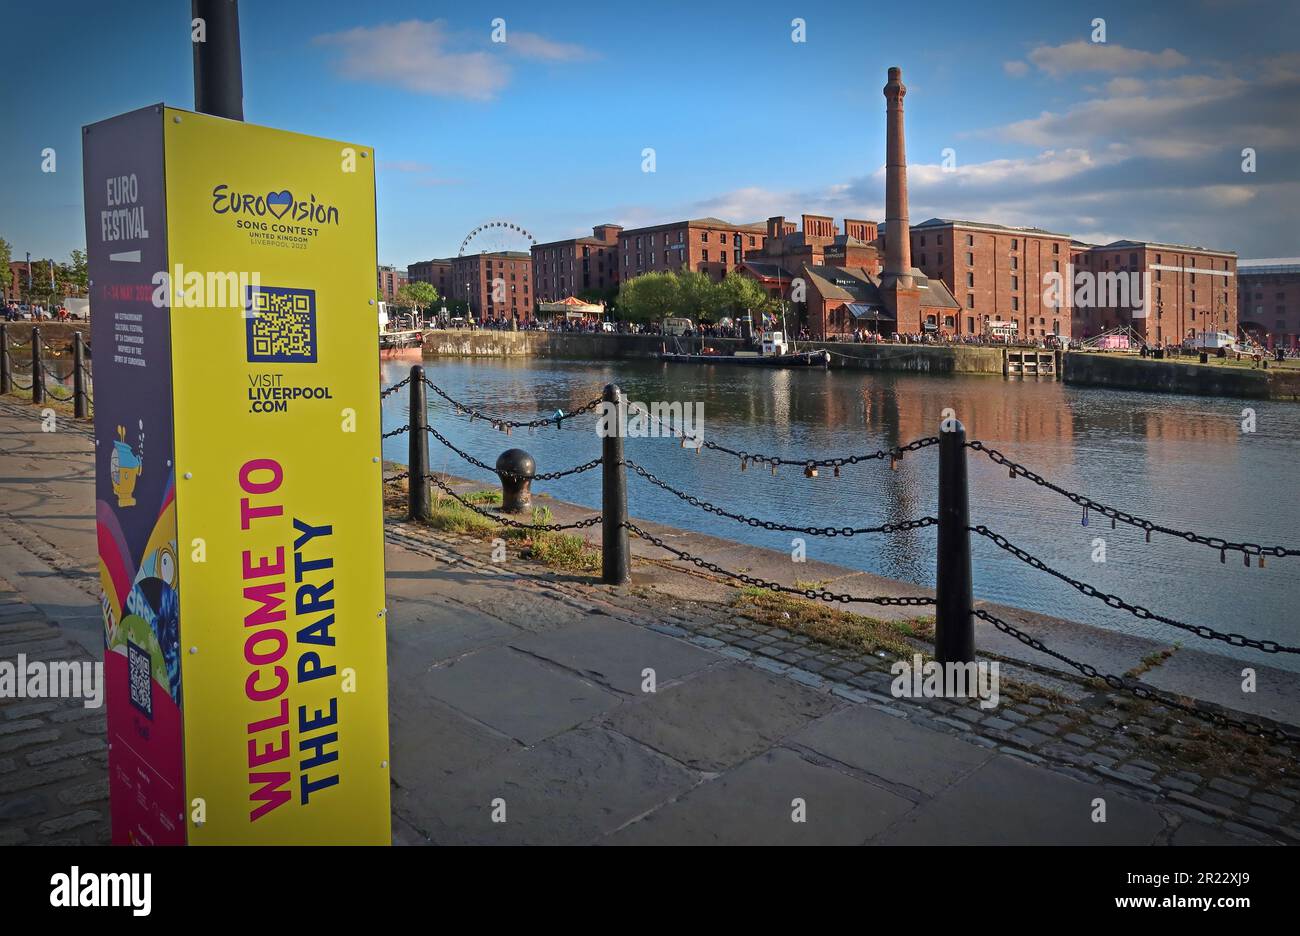 Shine Bright Liverpool - Willkommen bei der Eurovision 2023 am Royal Albert Dock, Pier Head, Liverpool, Merseyside, England, UK, L3 4AF Stockfoto